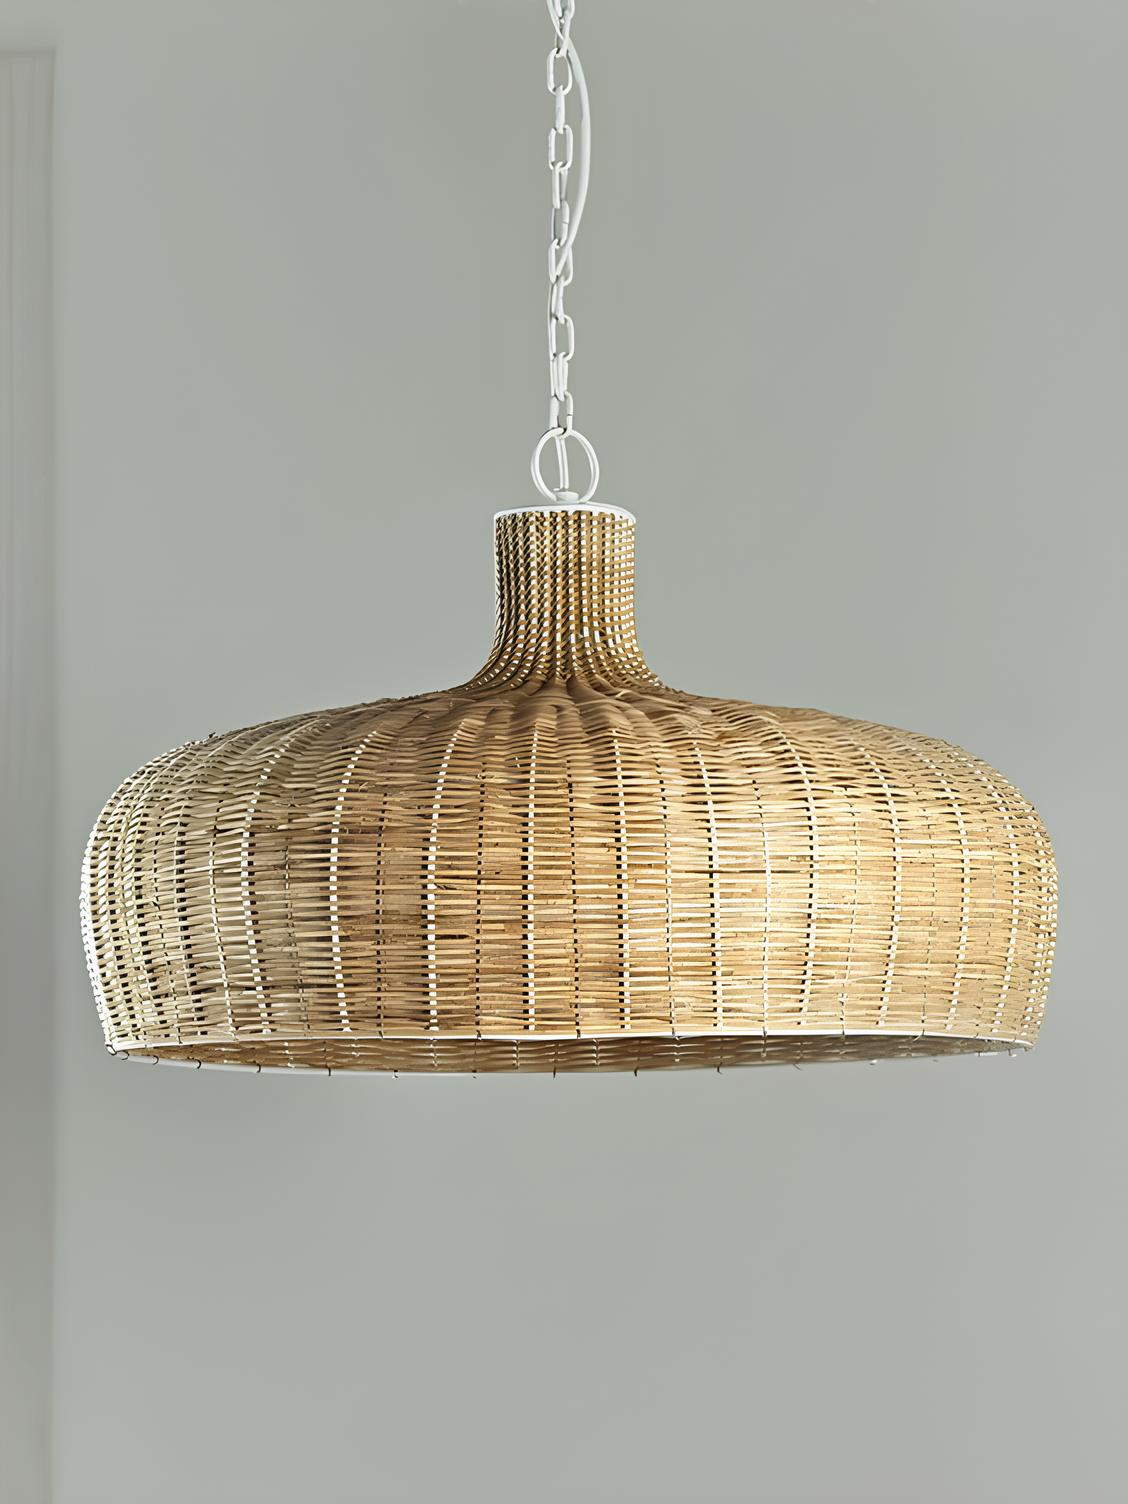 Bamboo Hanging lamp for Living Room | Rattan Pendant light | Cane ceiling light - Taara - Akway